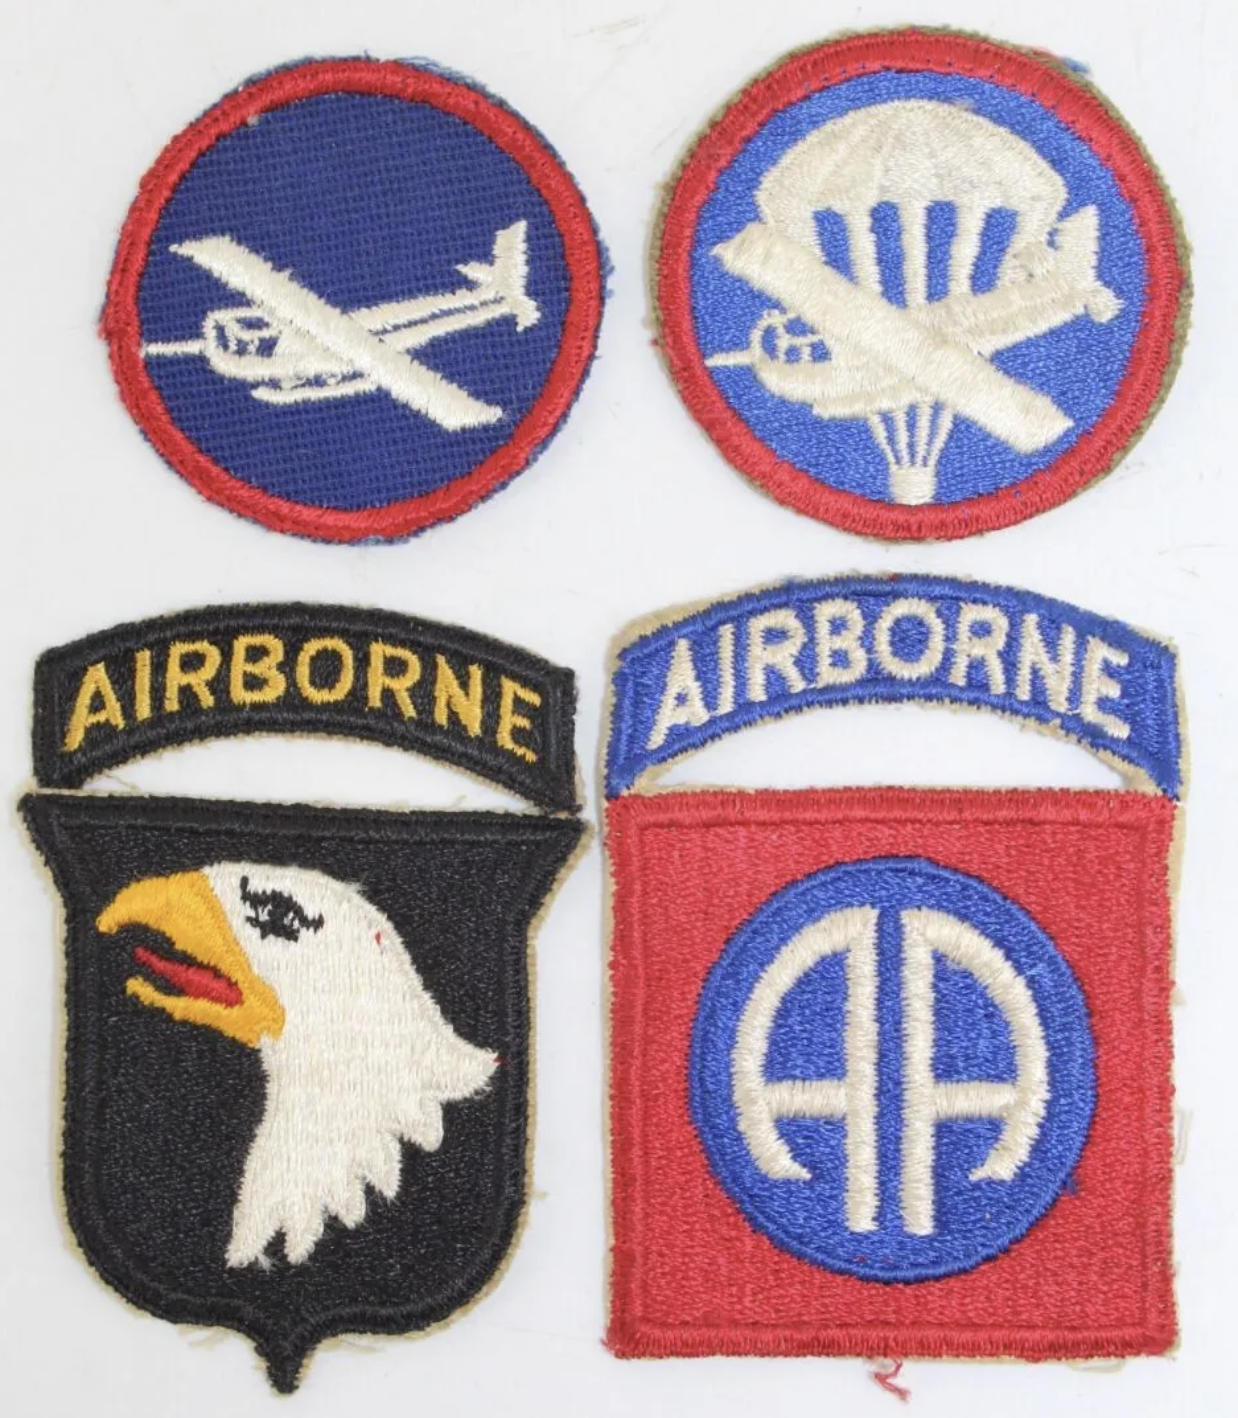 US airborne badges for sale